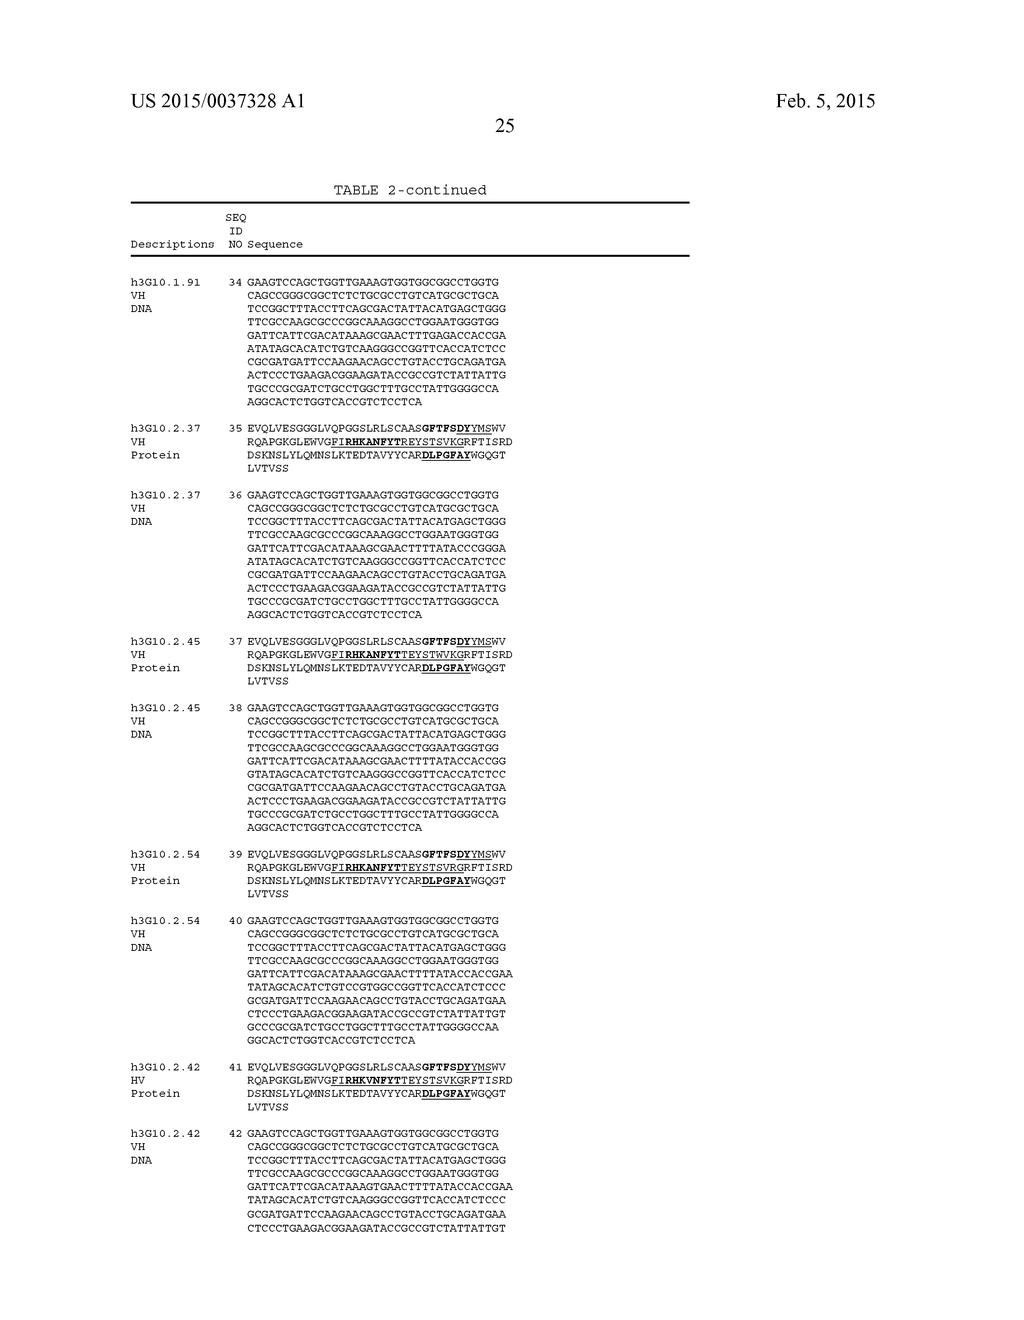 ANTI-CXCR4 ANTIBODIES AND ANTIBODY-DRUG CONJUGATES - diagram, schematic, and image 42